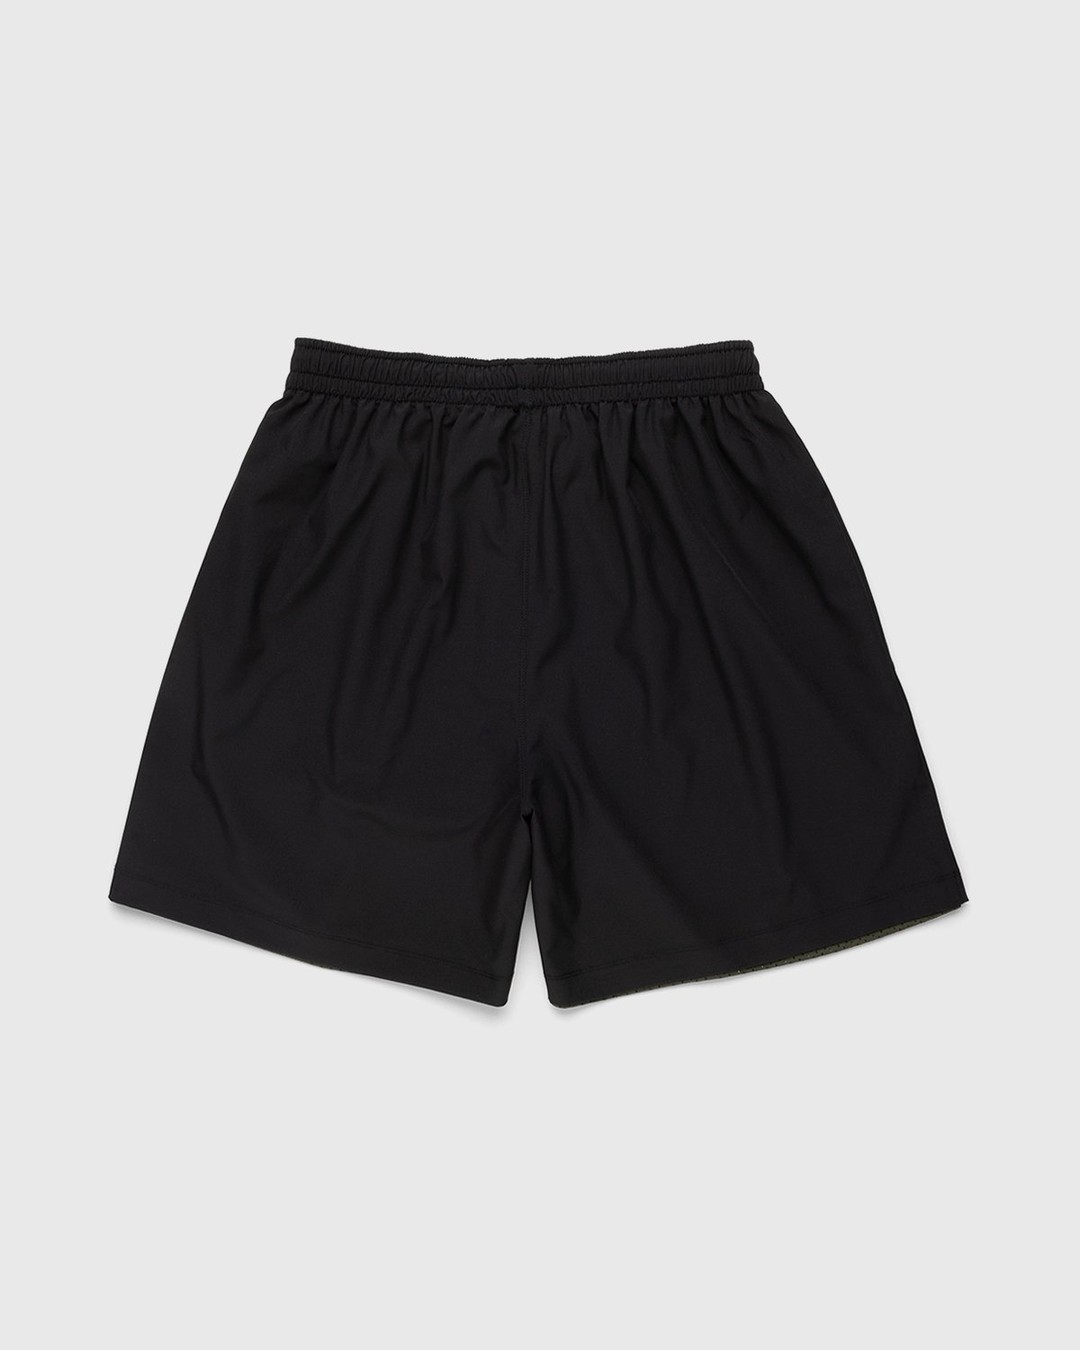 Highsnobiety – HS Sports Reversible Mesh Shorts Black/Khaki - Short Cuts - Green - Image 4